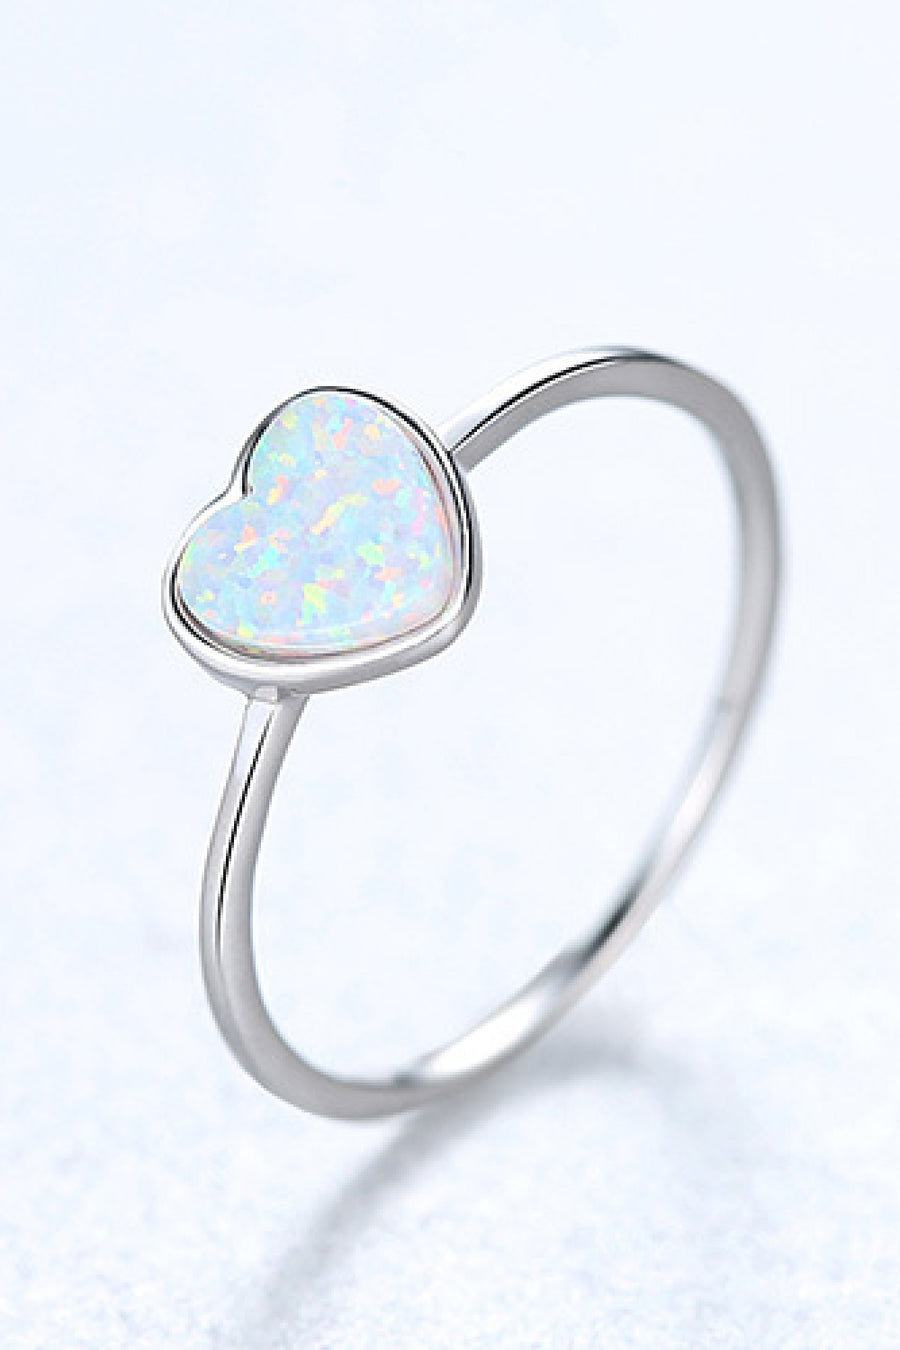 Opal Heart 925 Sterling Silver Ring